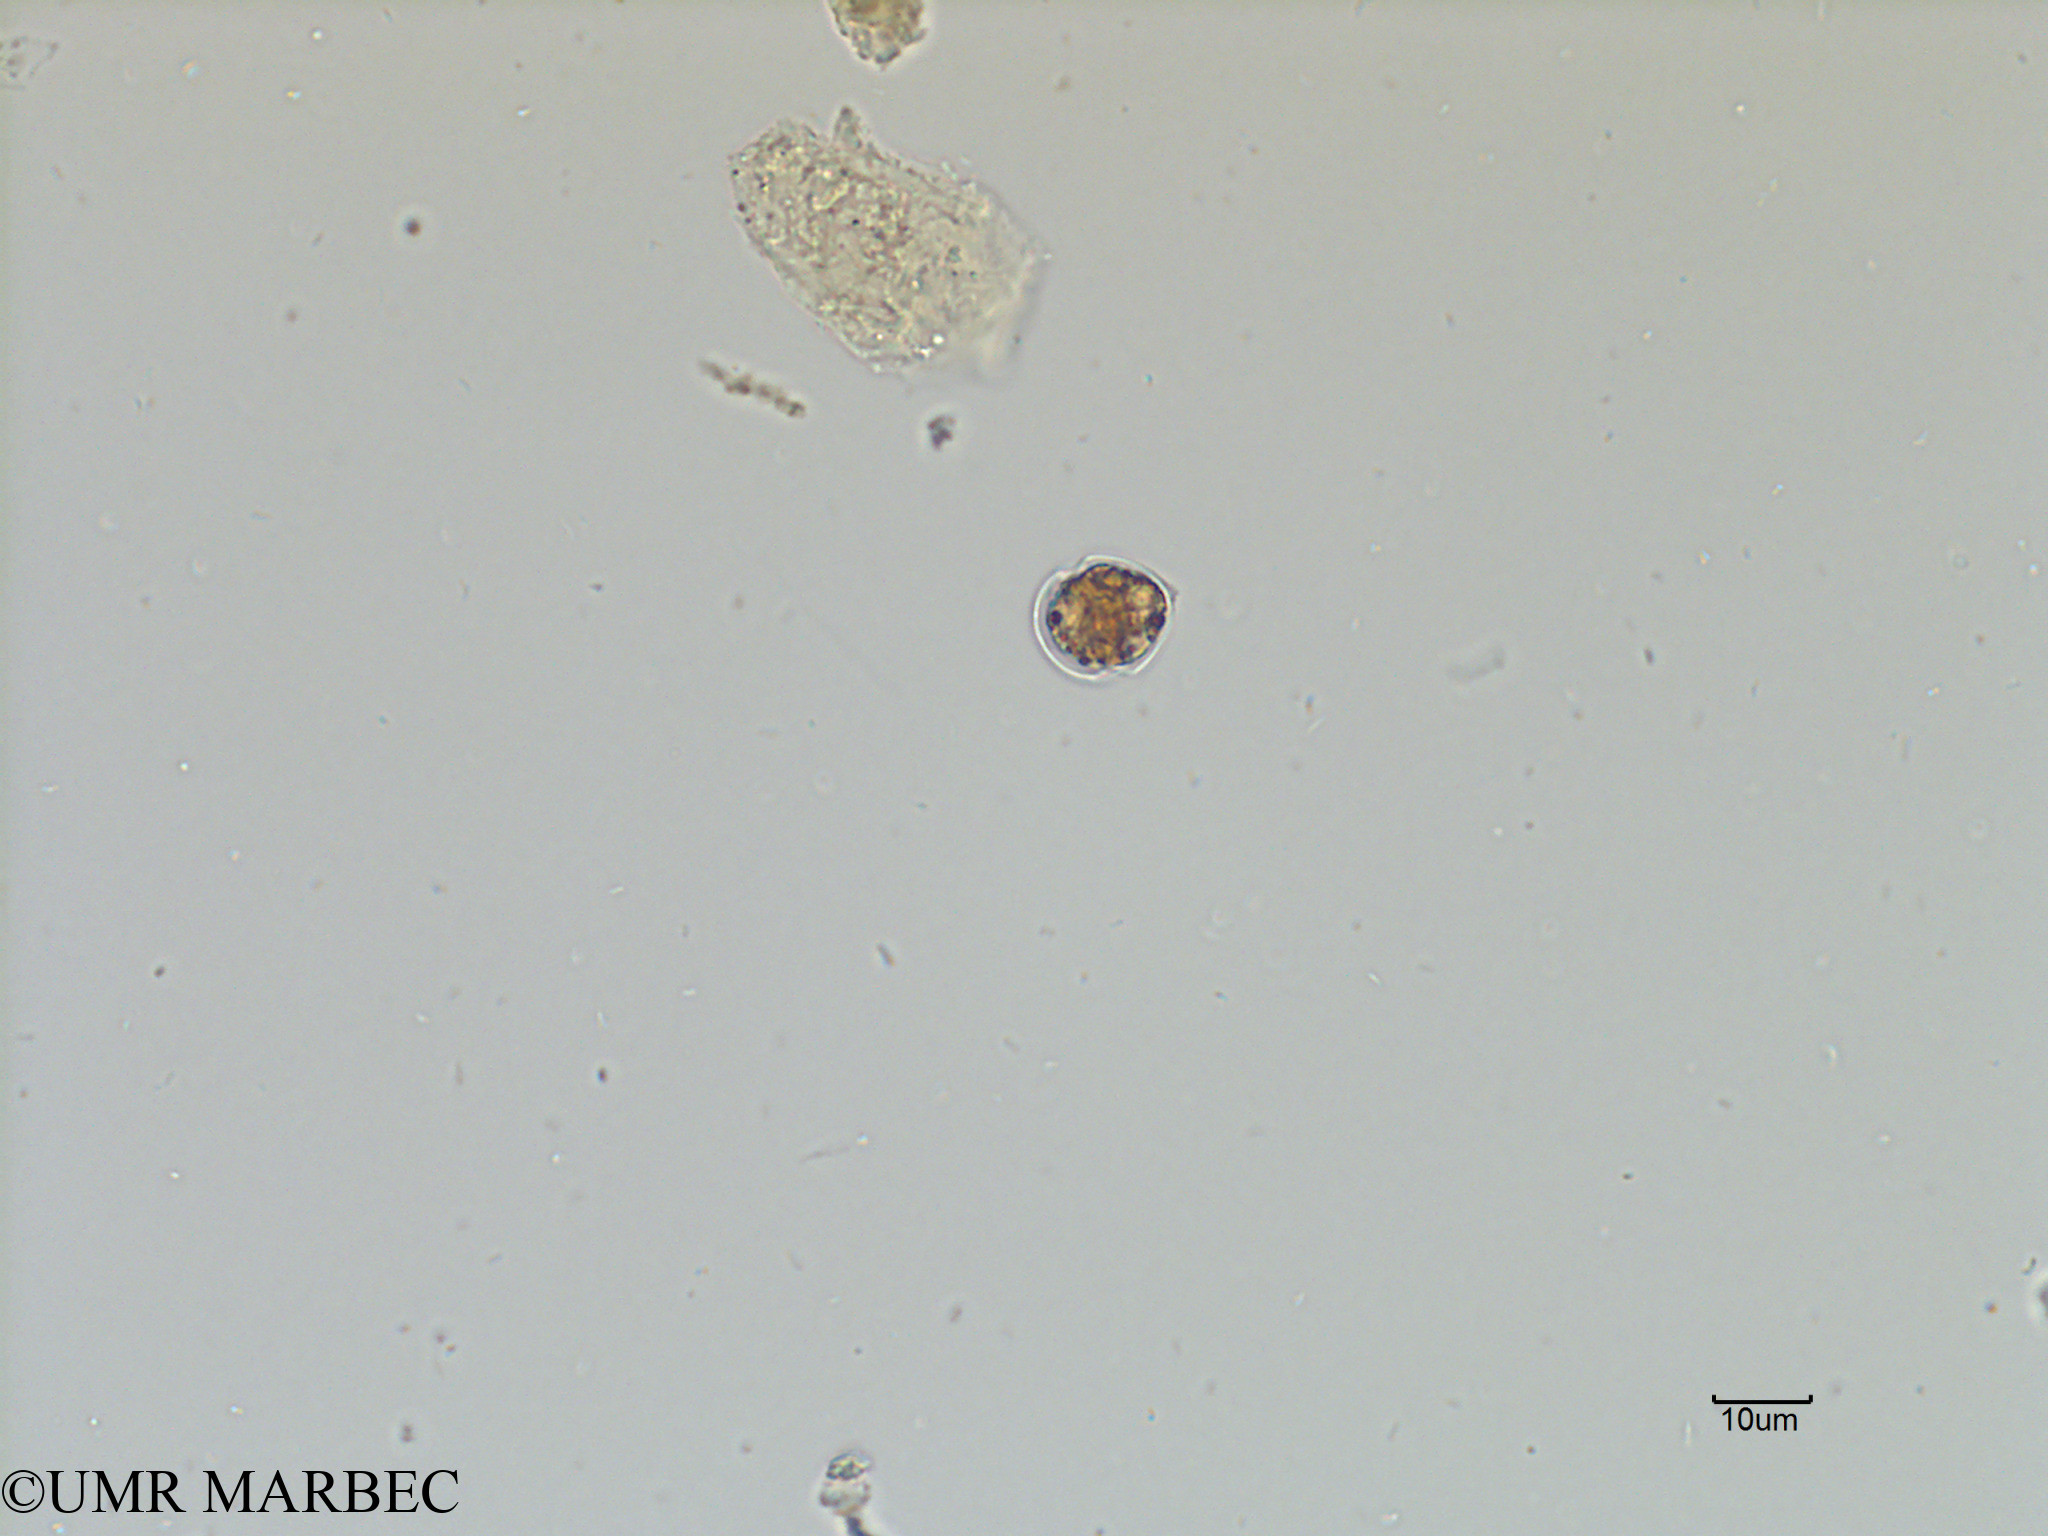 phyto/Scattered_Islands/iles_glorieuses/SIREME November 2015/Scrippsiella spp (SIREME-Glorieuses2015-ech1-171116-Scrippsiella-5)(copy).jpg